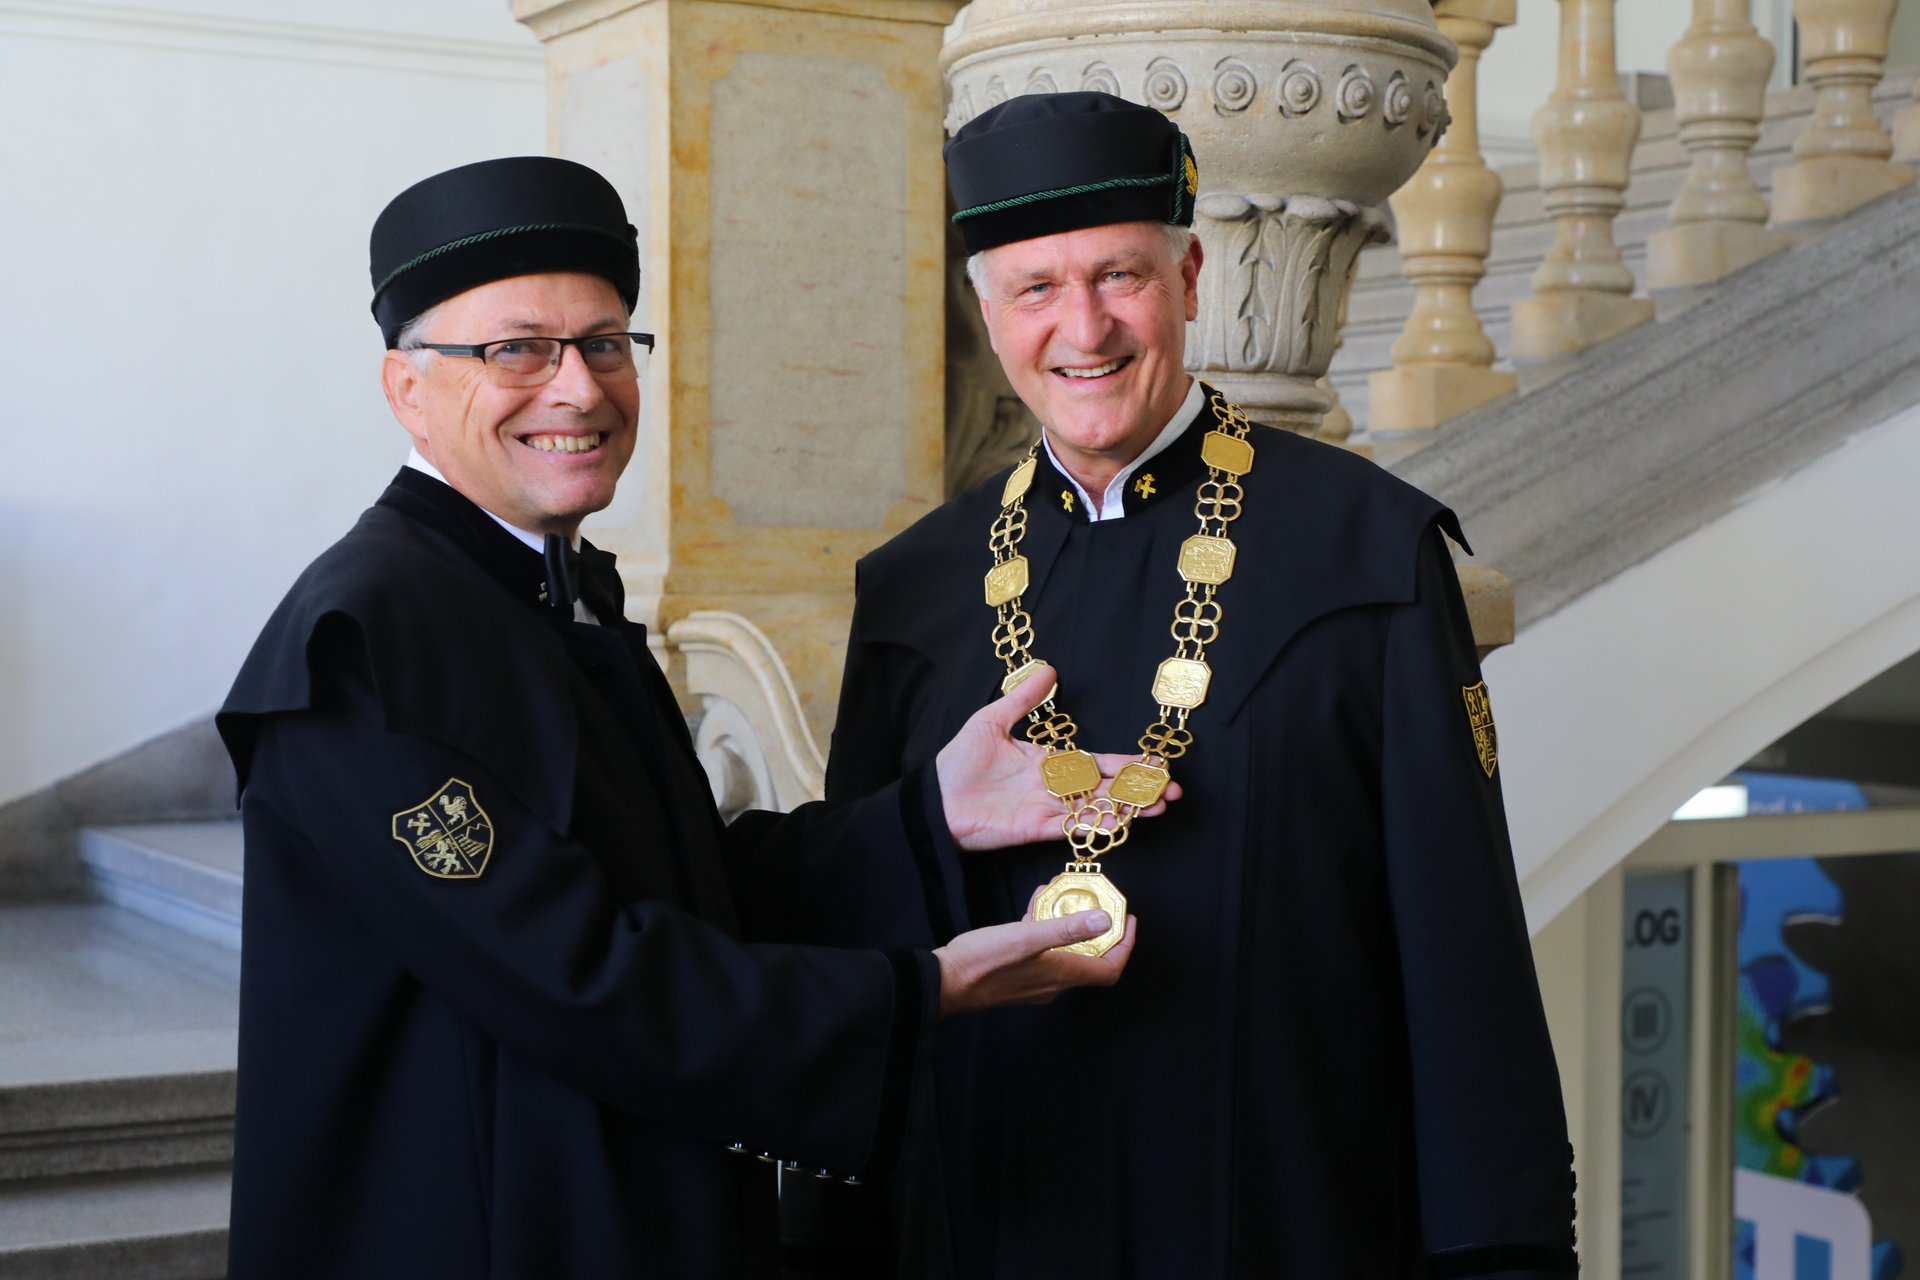 Der bisherige Rektor Wilfried Eichlseder (links) übergab das Amt samt Rektorskette an seinen Nachfolger Peter Moser. [Fotocredit: Foto Freisinger]